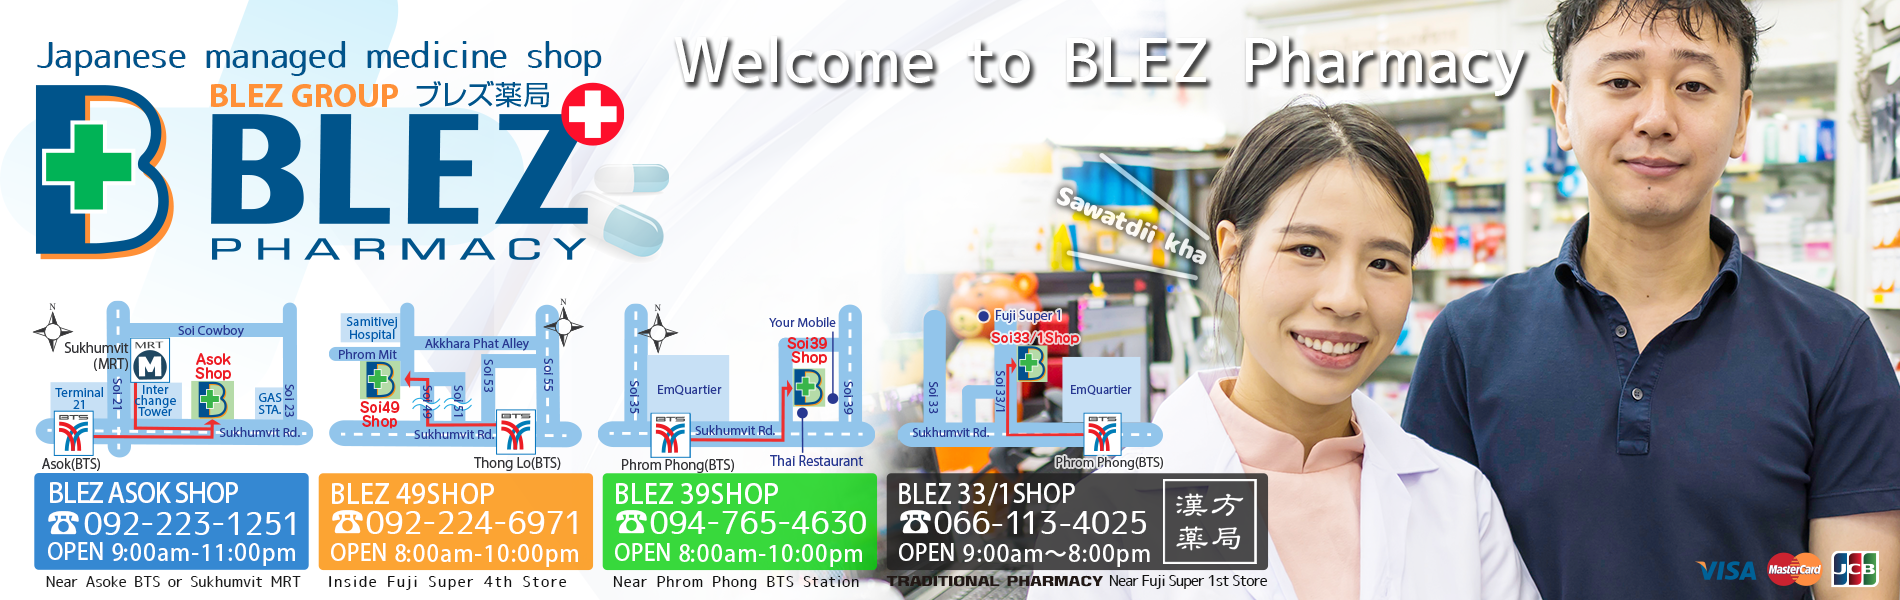 Welcome to BLEZ Pharmacy in Bangkok